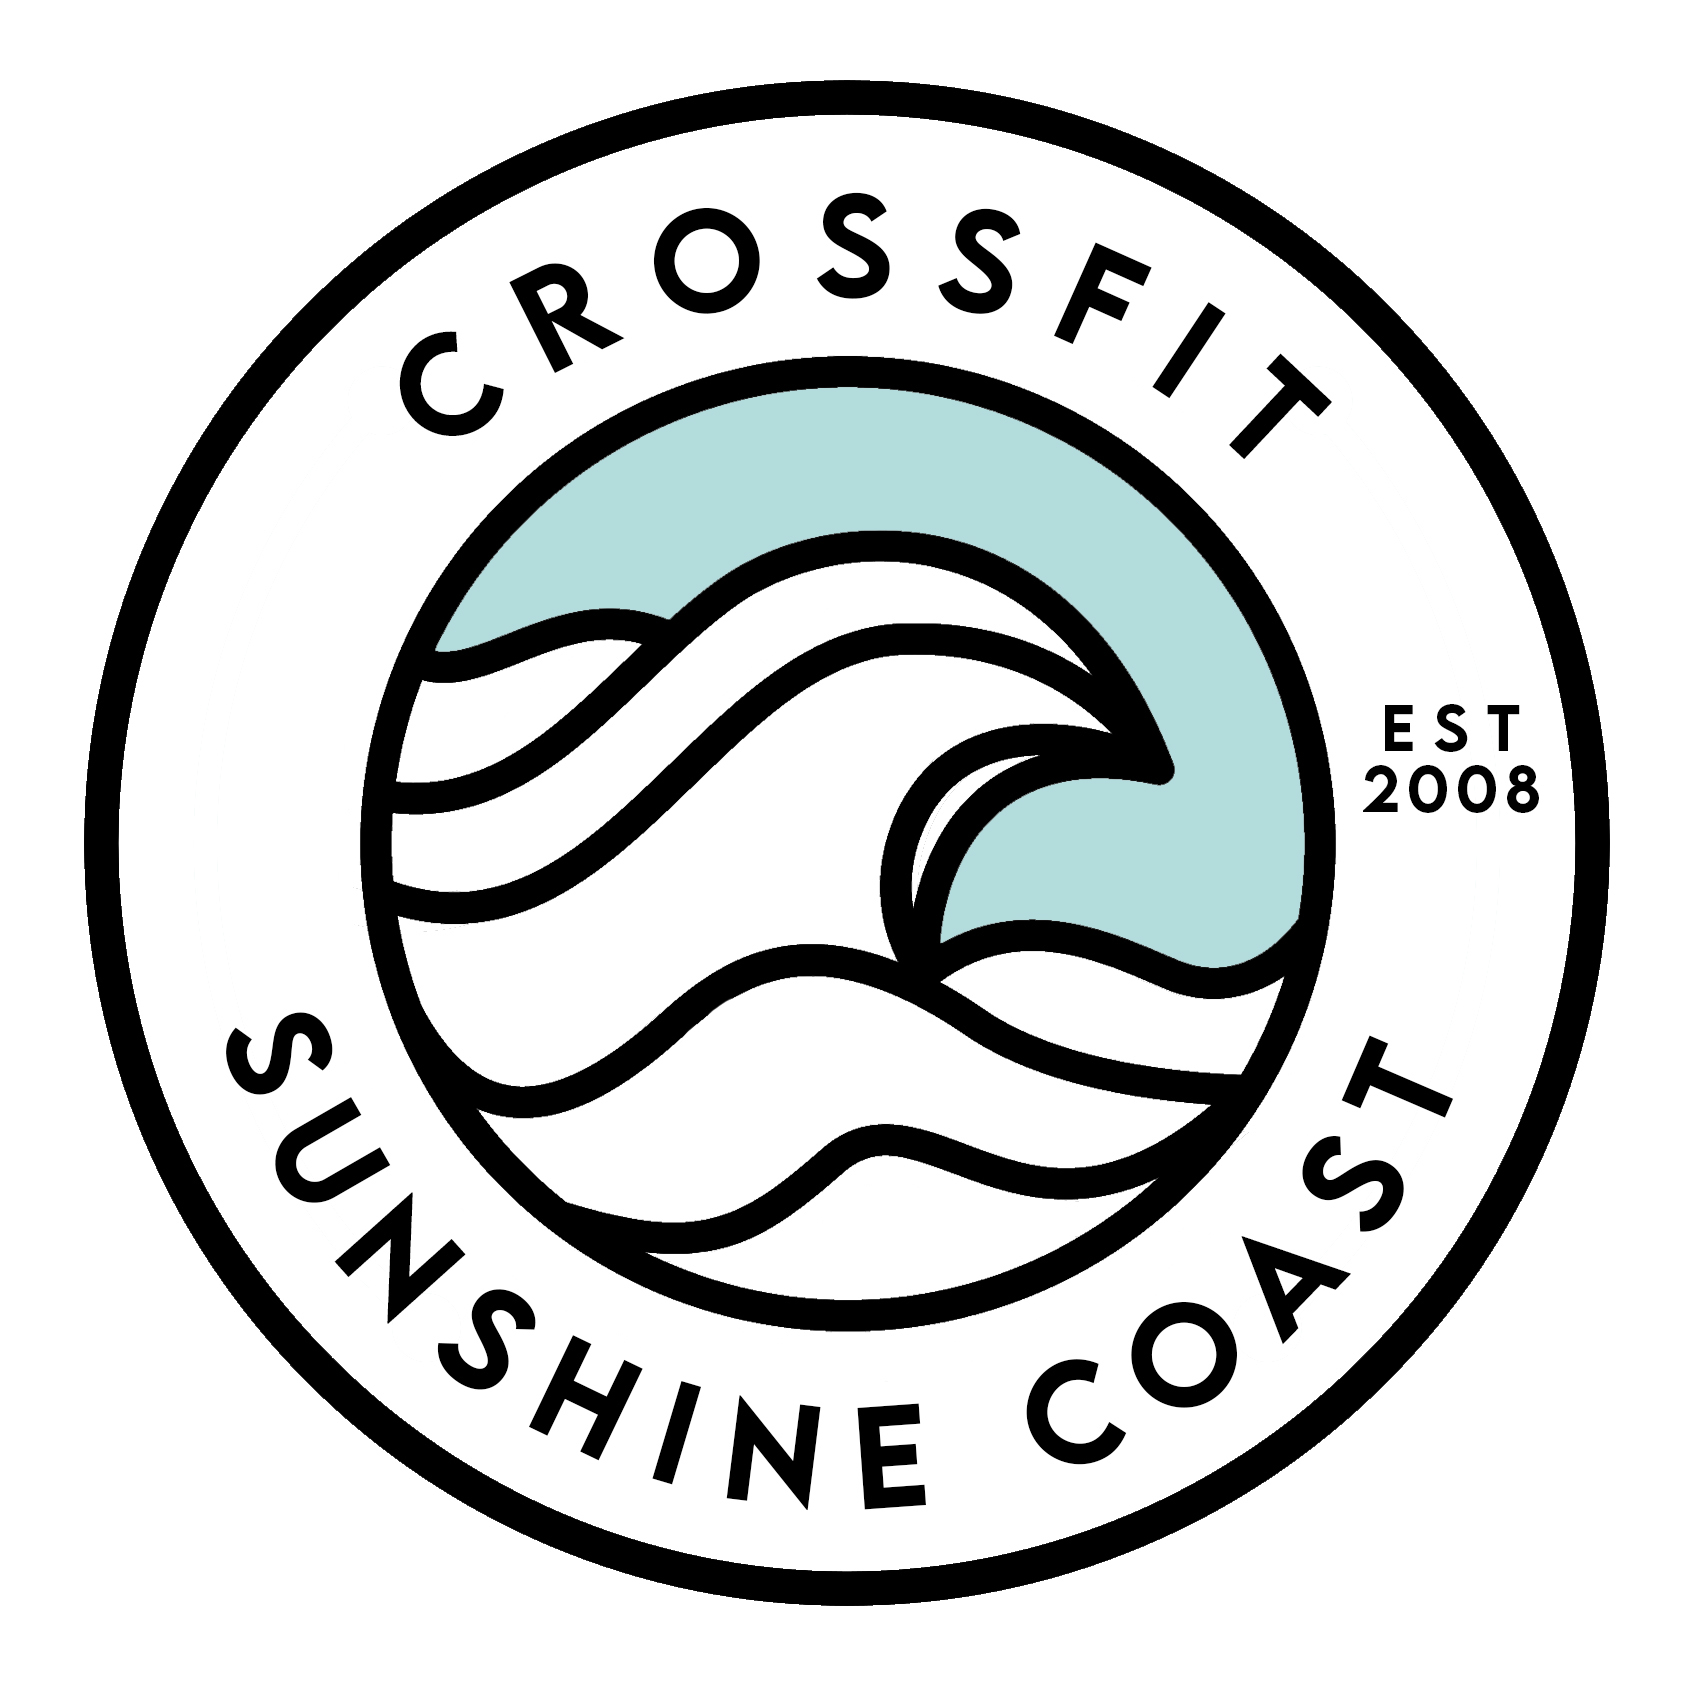 CrossFit Sunshine Coast | gym | 4/23 Caloundra Rd, Caloundra West QLD 4551, Australia | 0401564322 OR +61 401 564 322